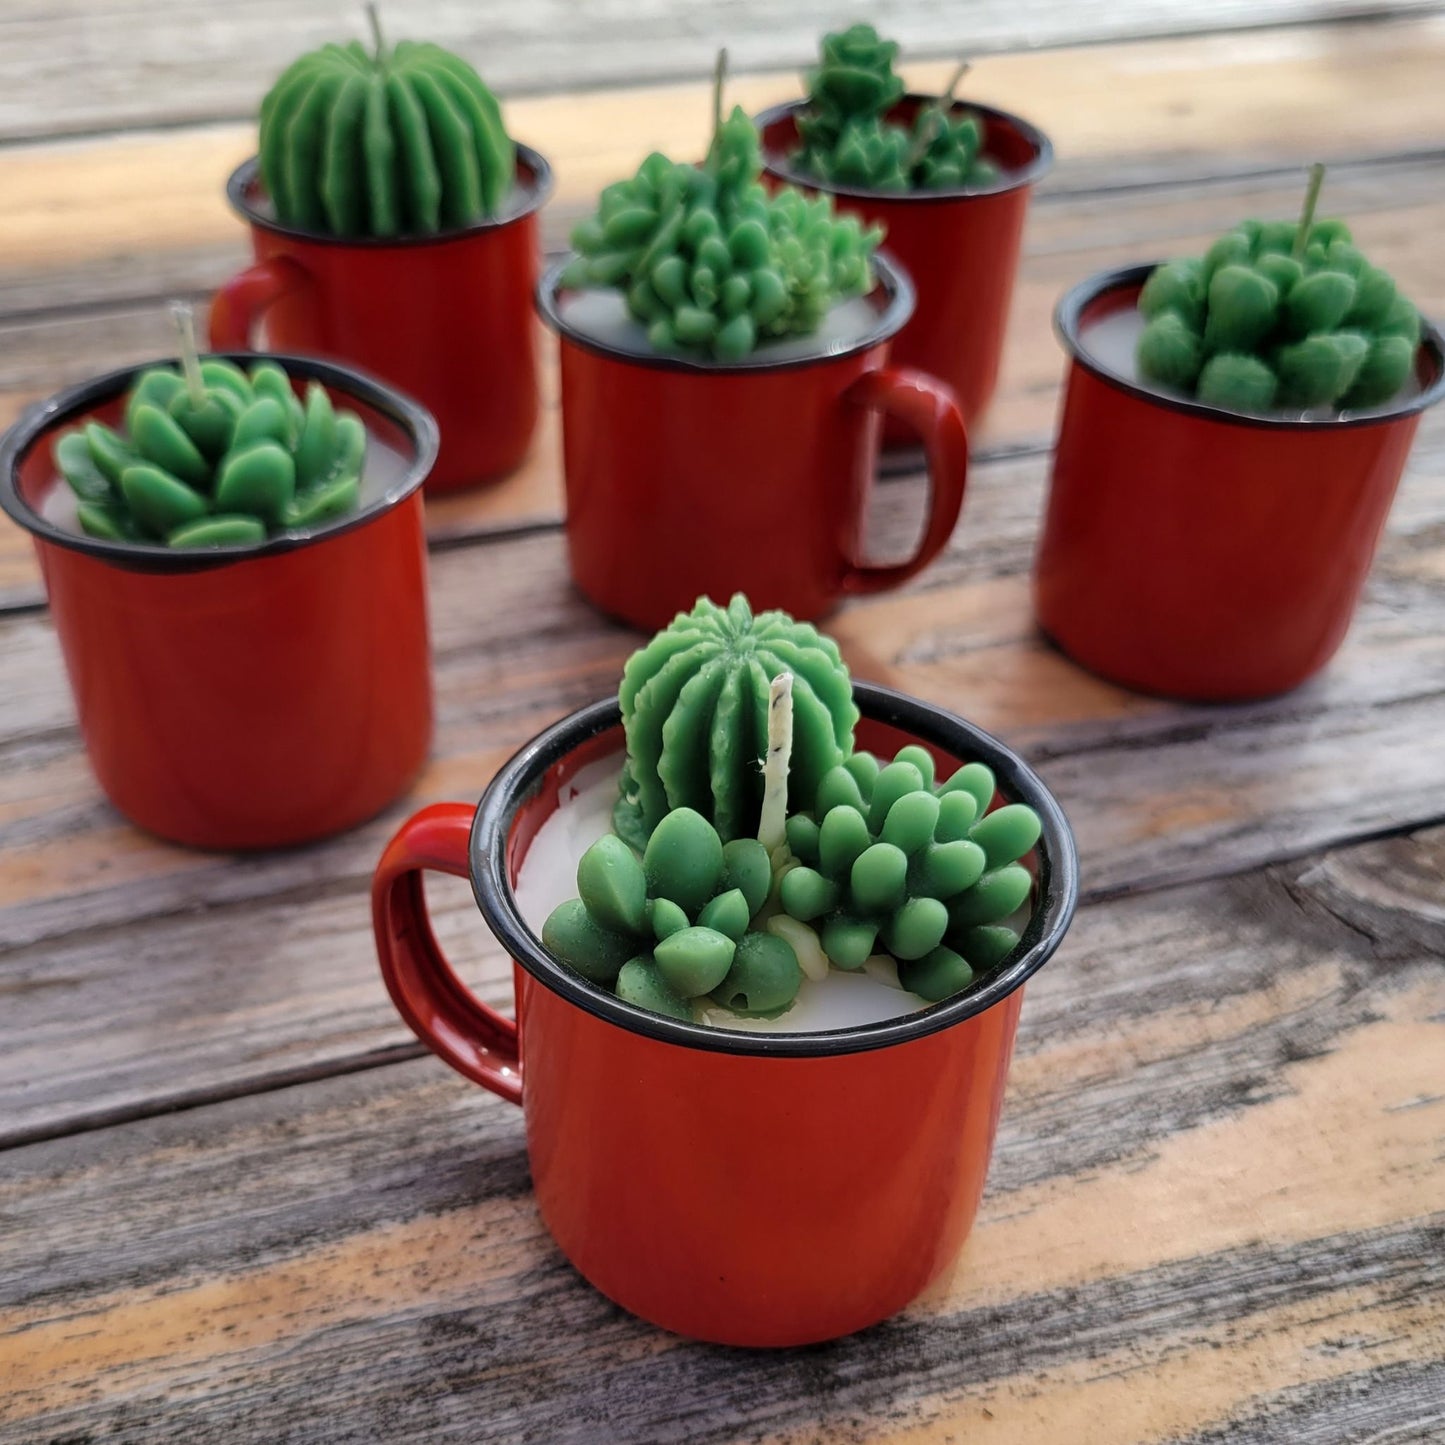 Six handmade cactus candles in red enamel mugs.